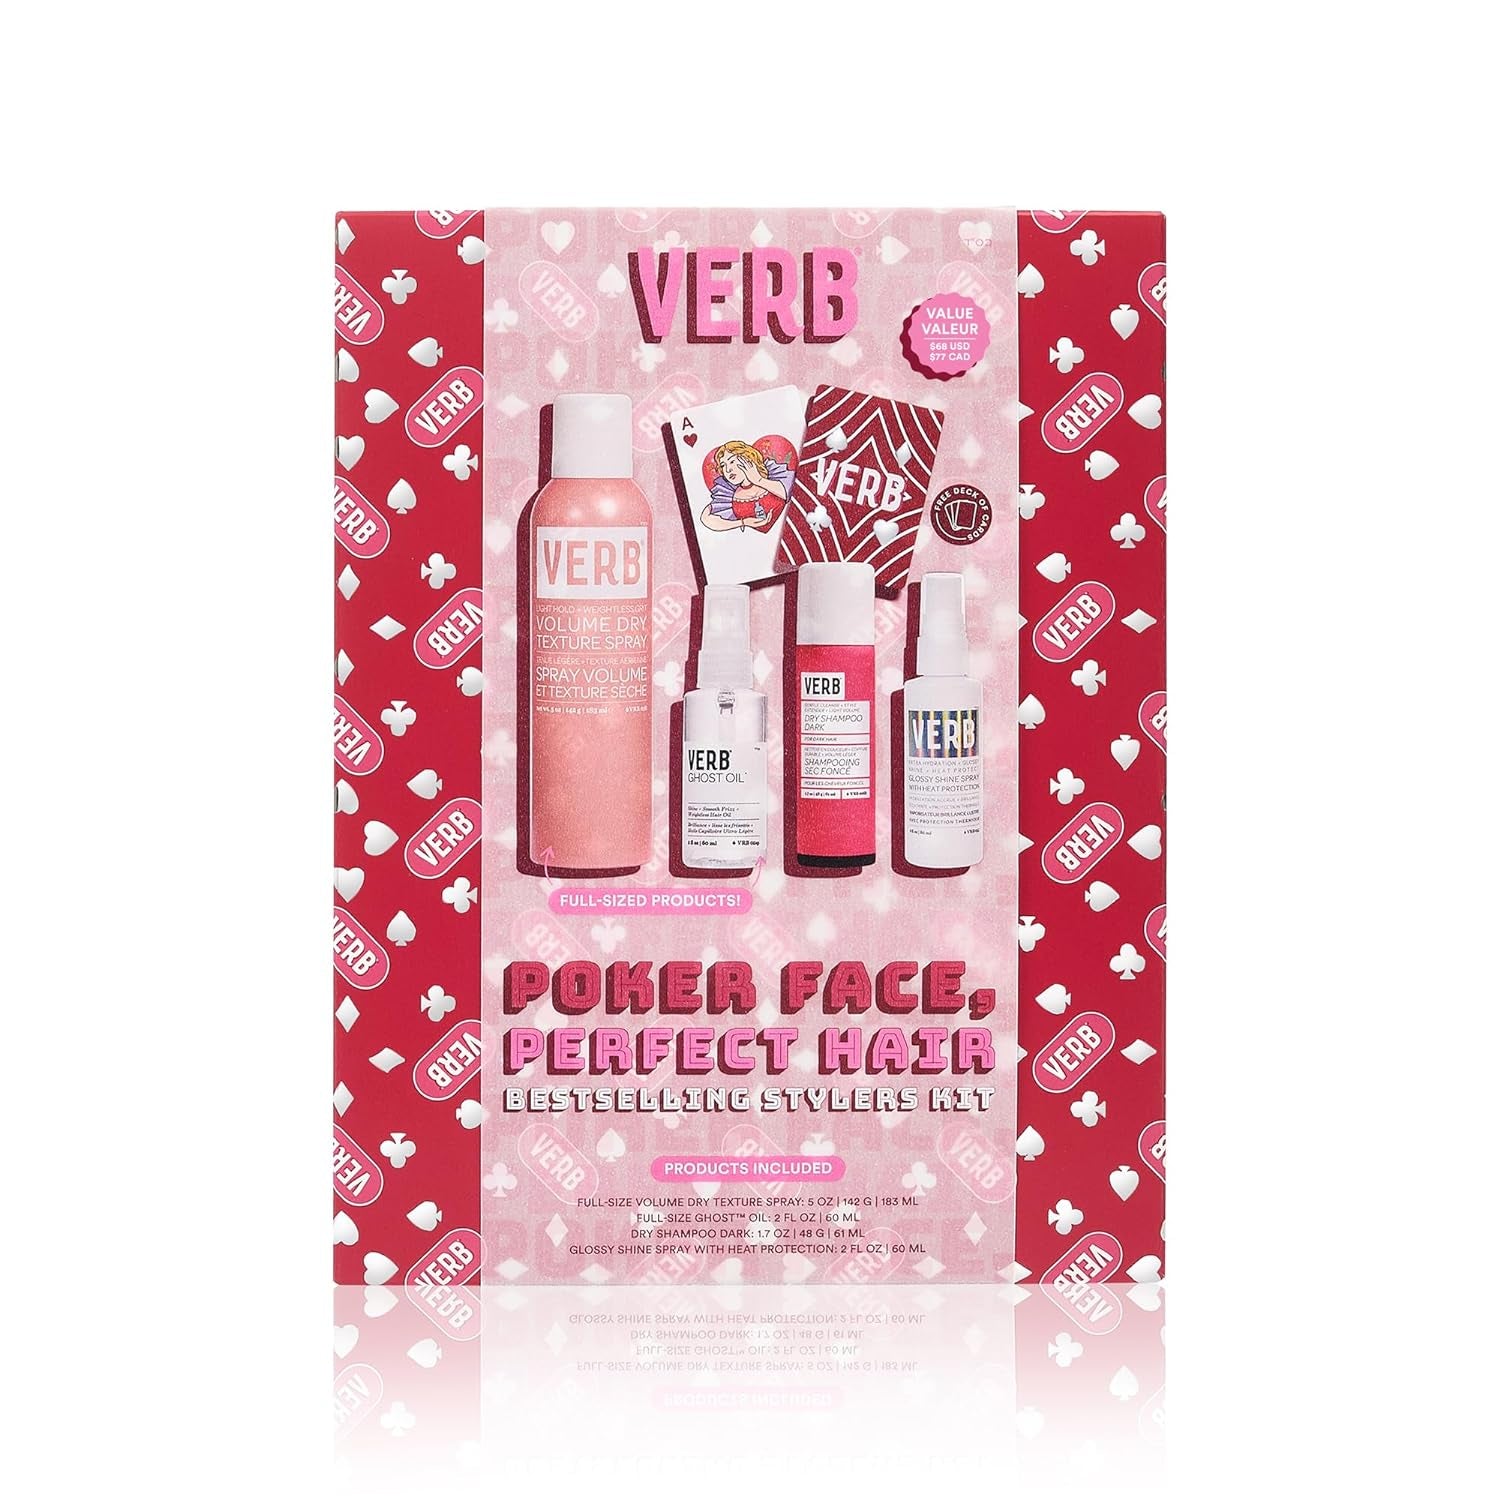 VERB Volume Dry Texture Spray